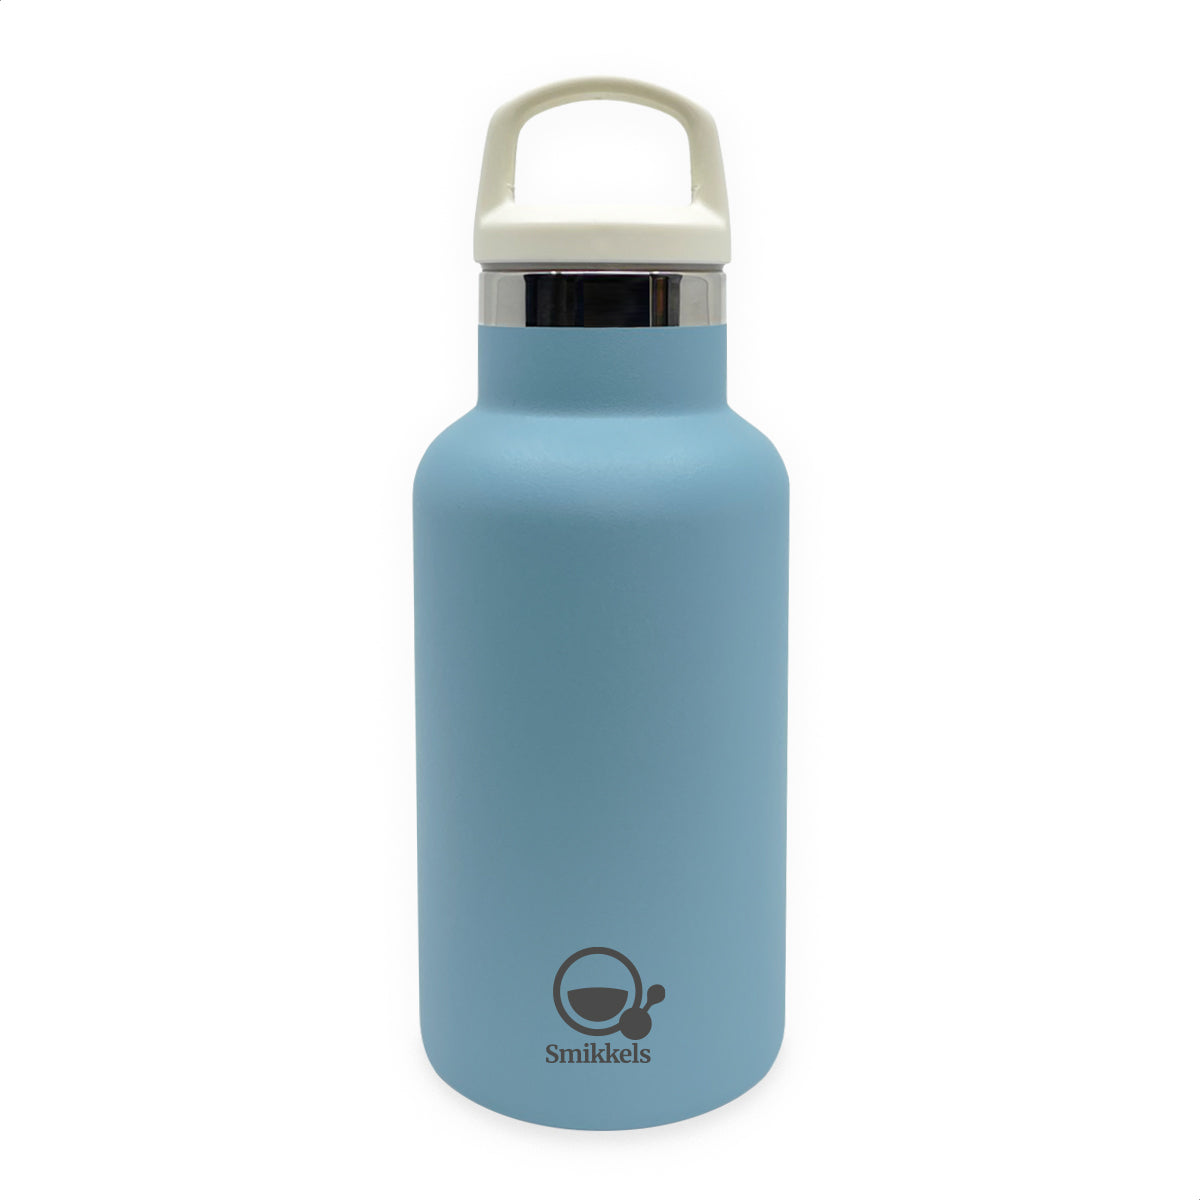 Smikkels - RVS thermo bottle 350 ml - blue